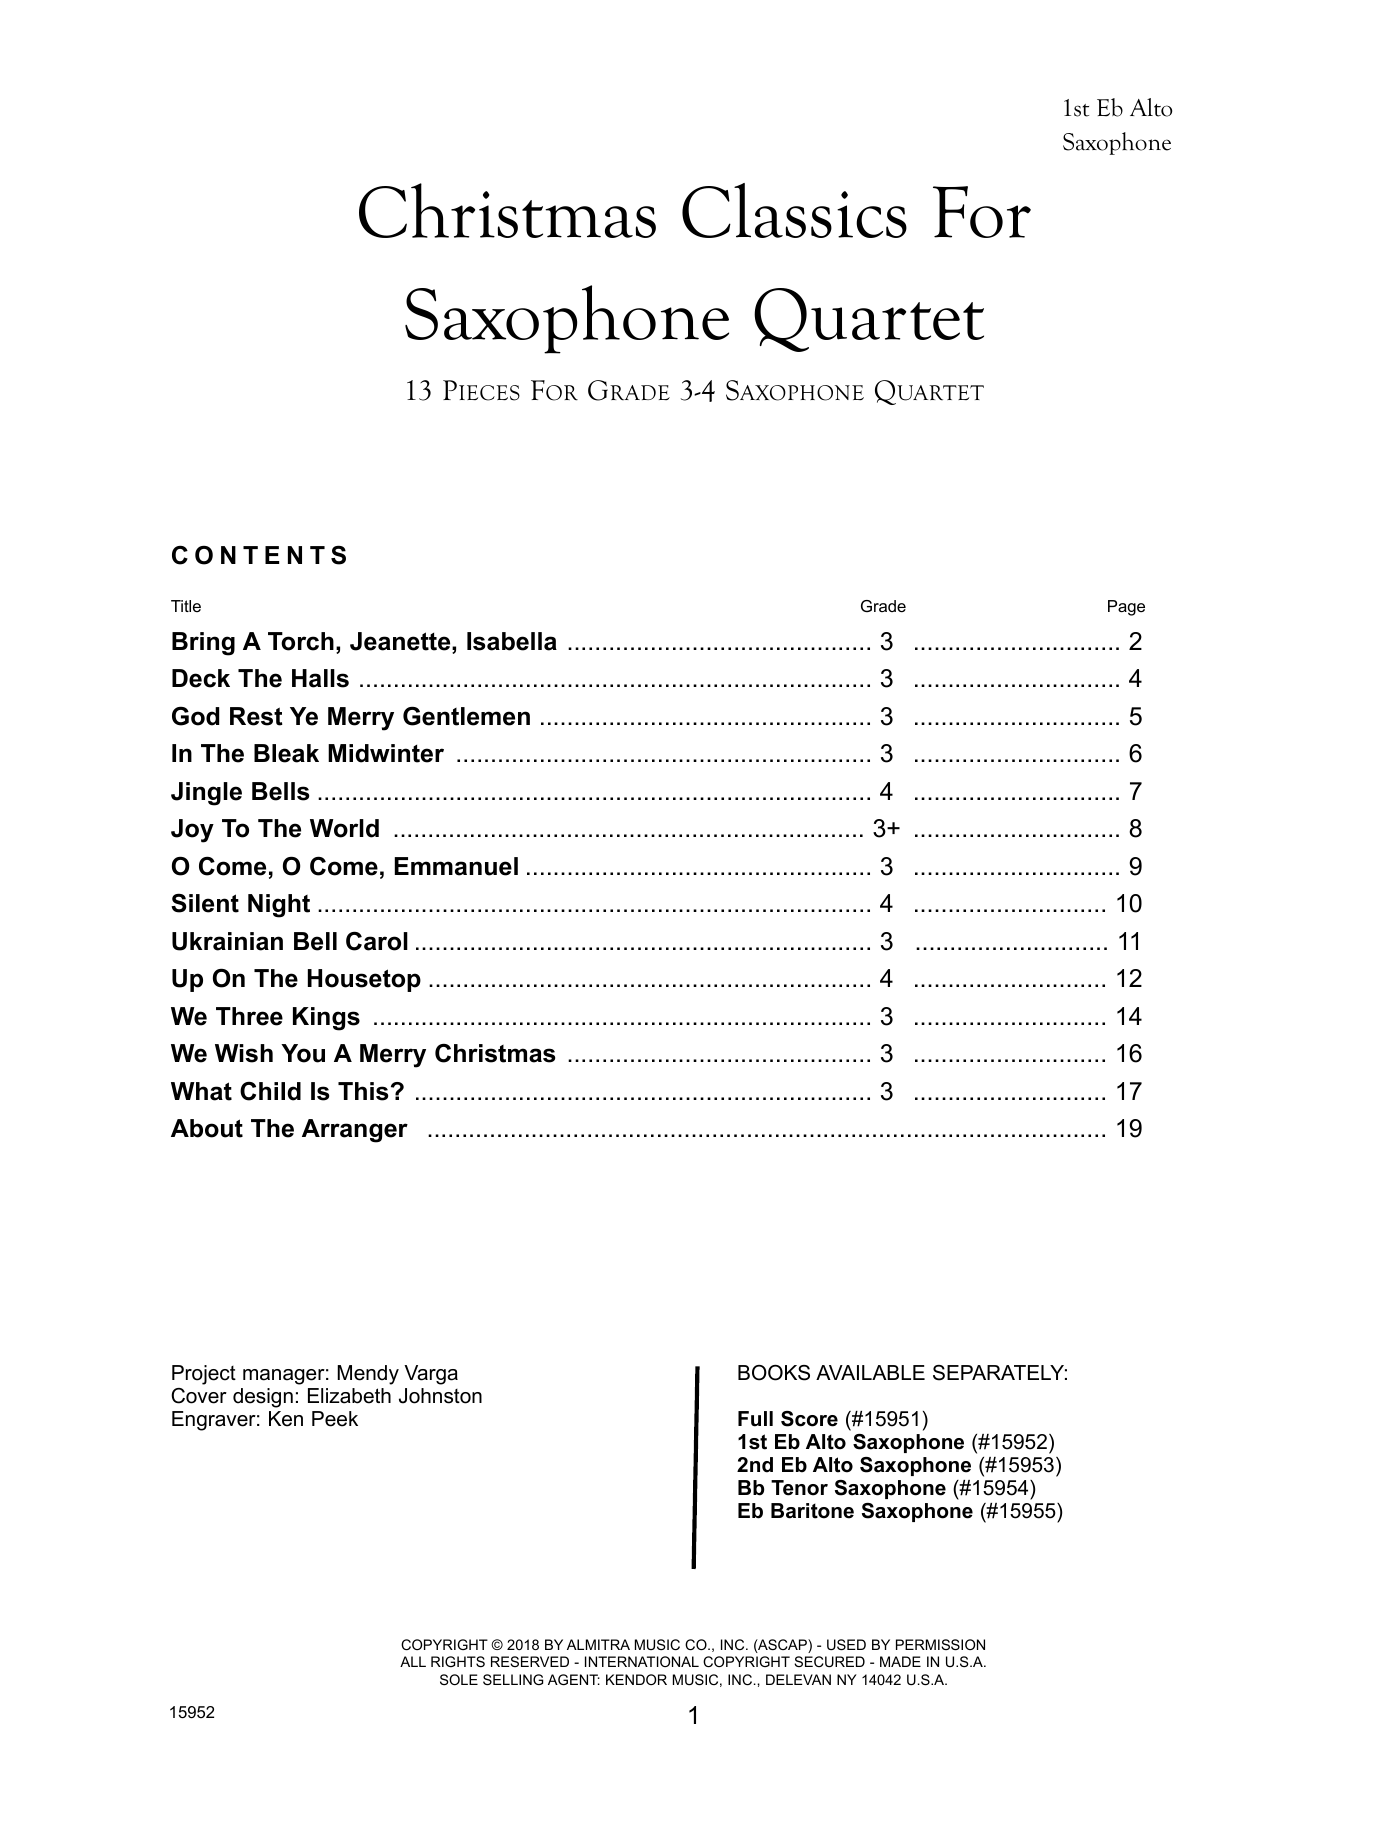 Christmas Classics For Saxophone Quartet - 1st Eb Alto Saxophone (Woodwind Ensemble) von Frank J. Halferty